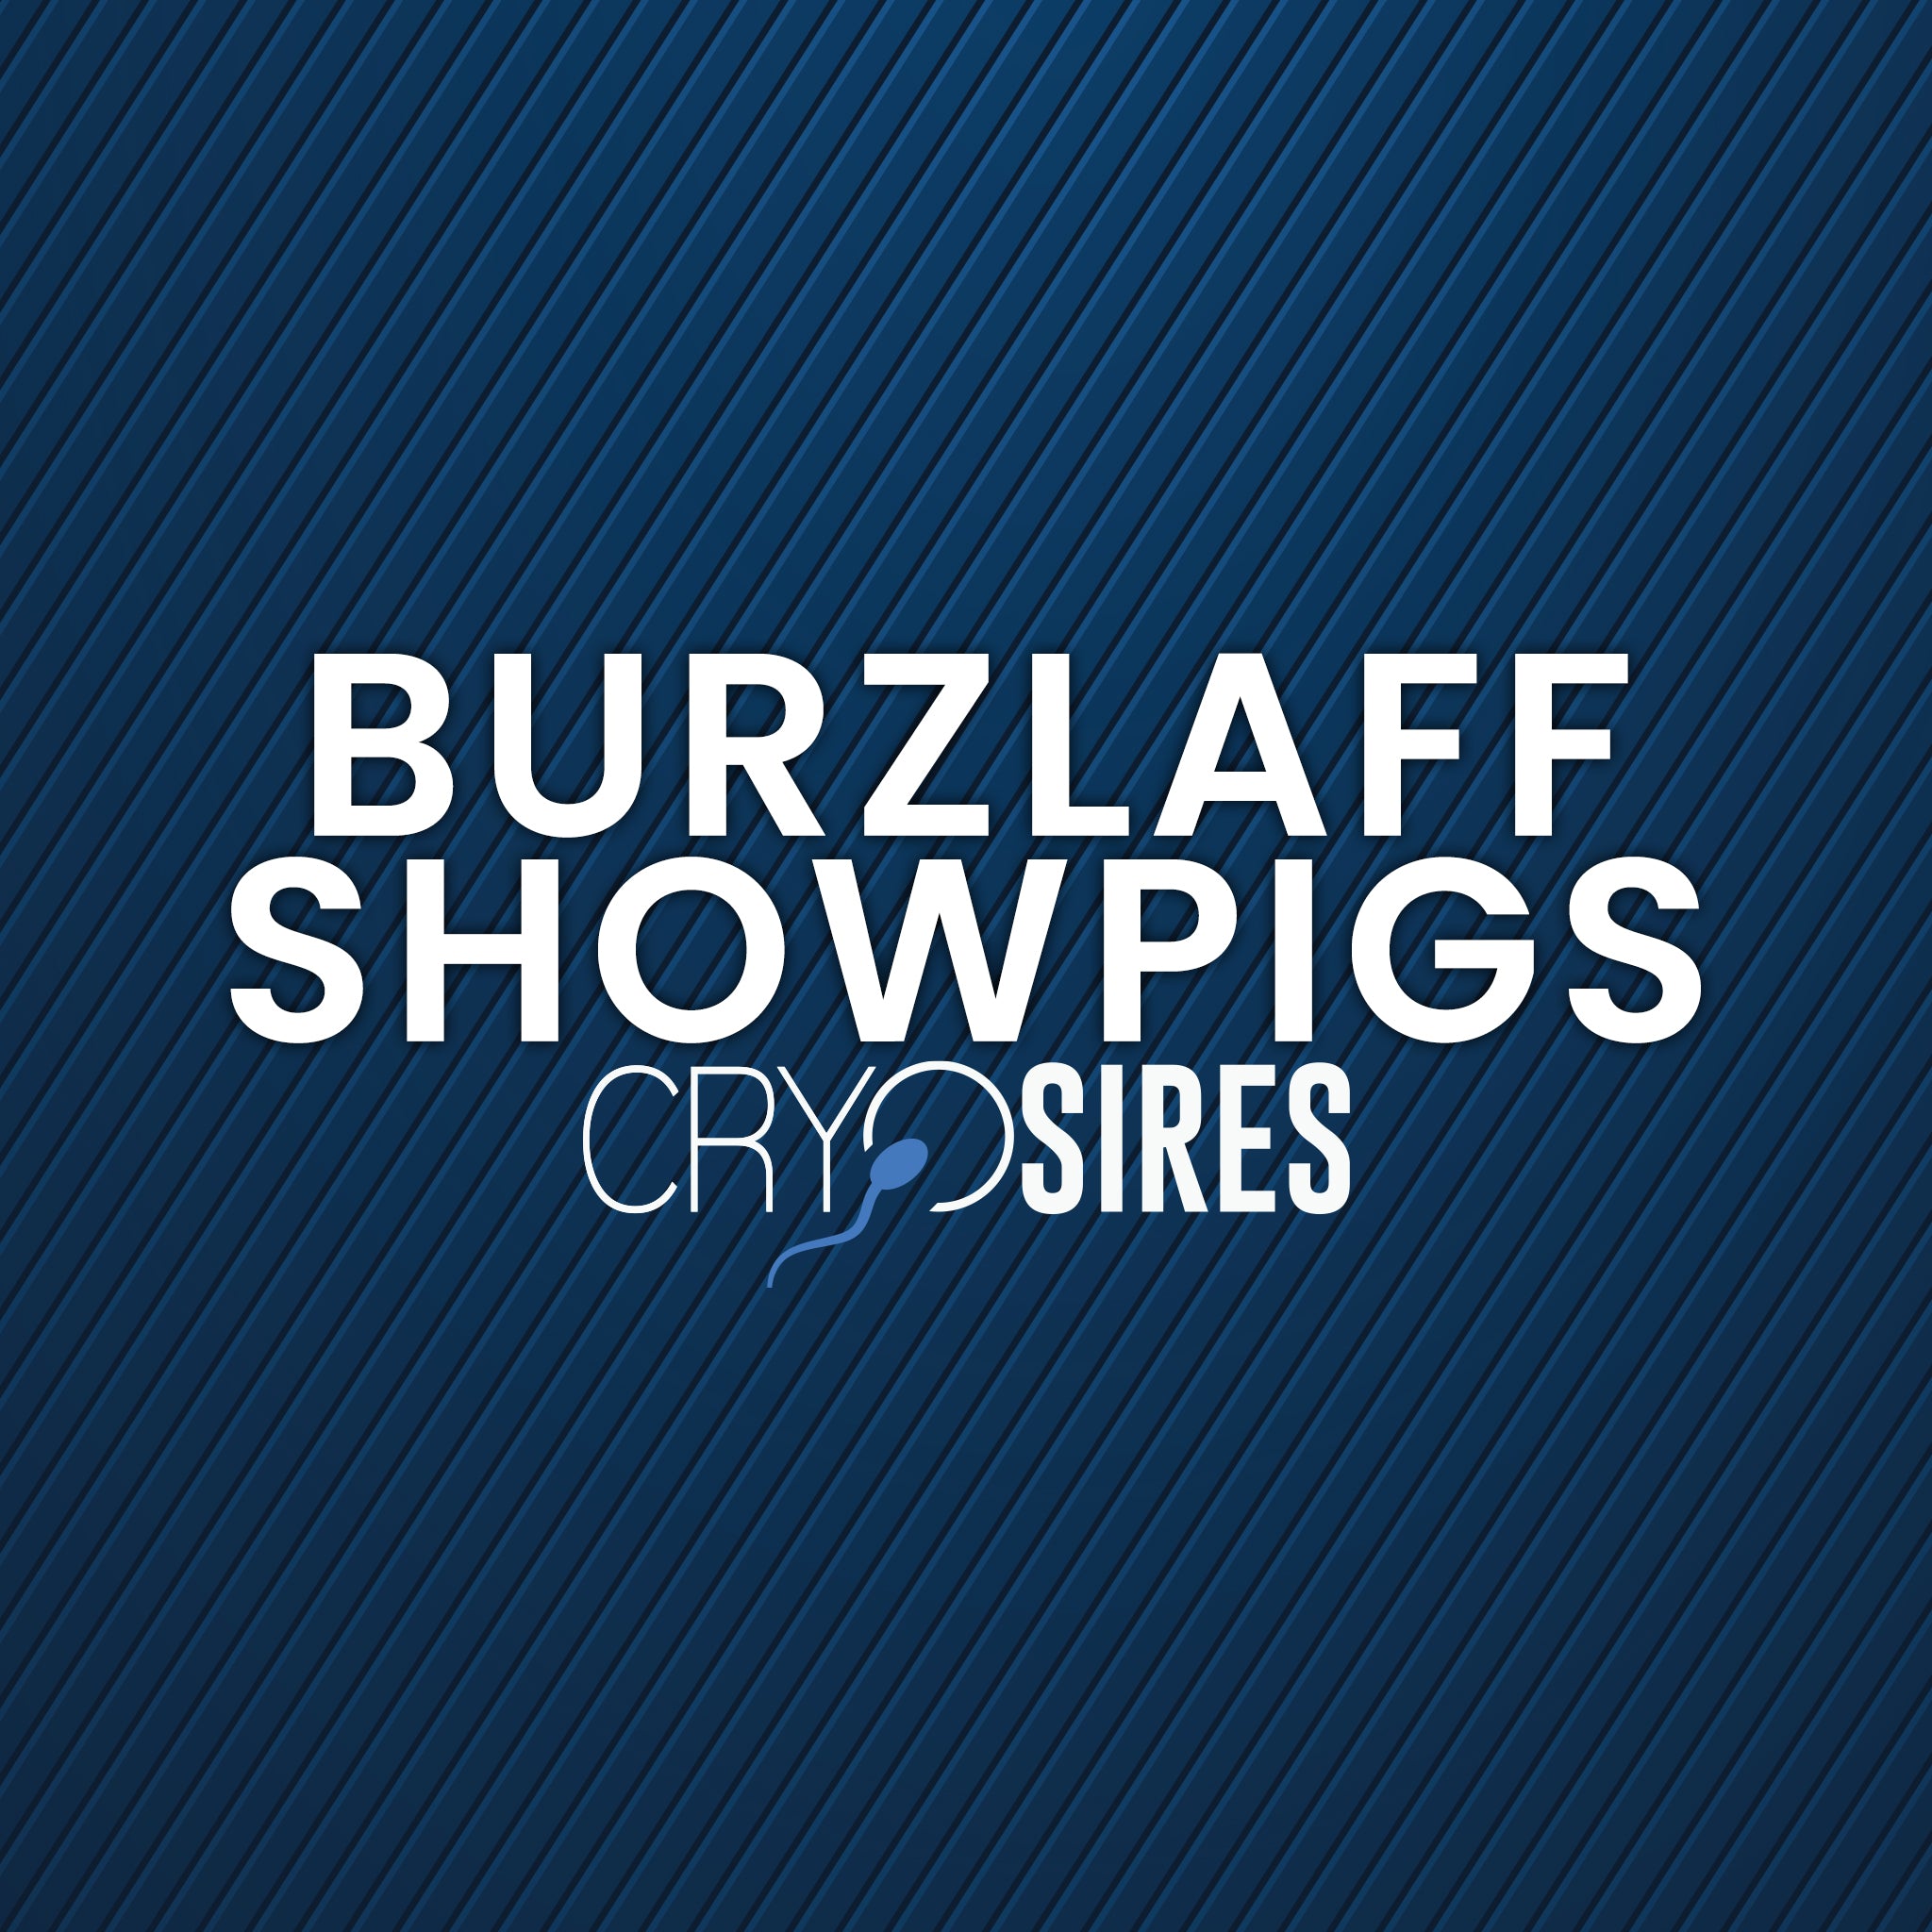 Burzlaff Showpigs